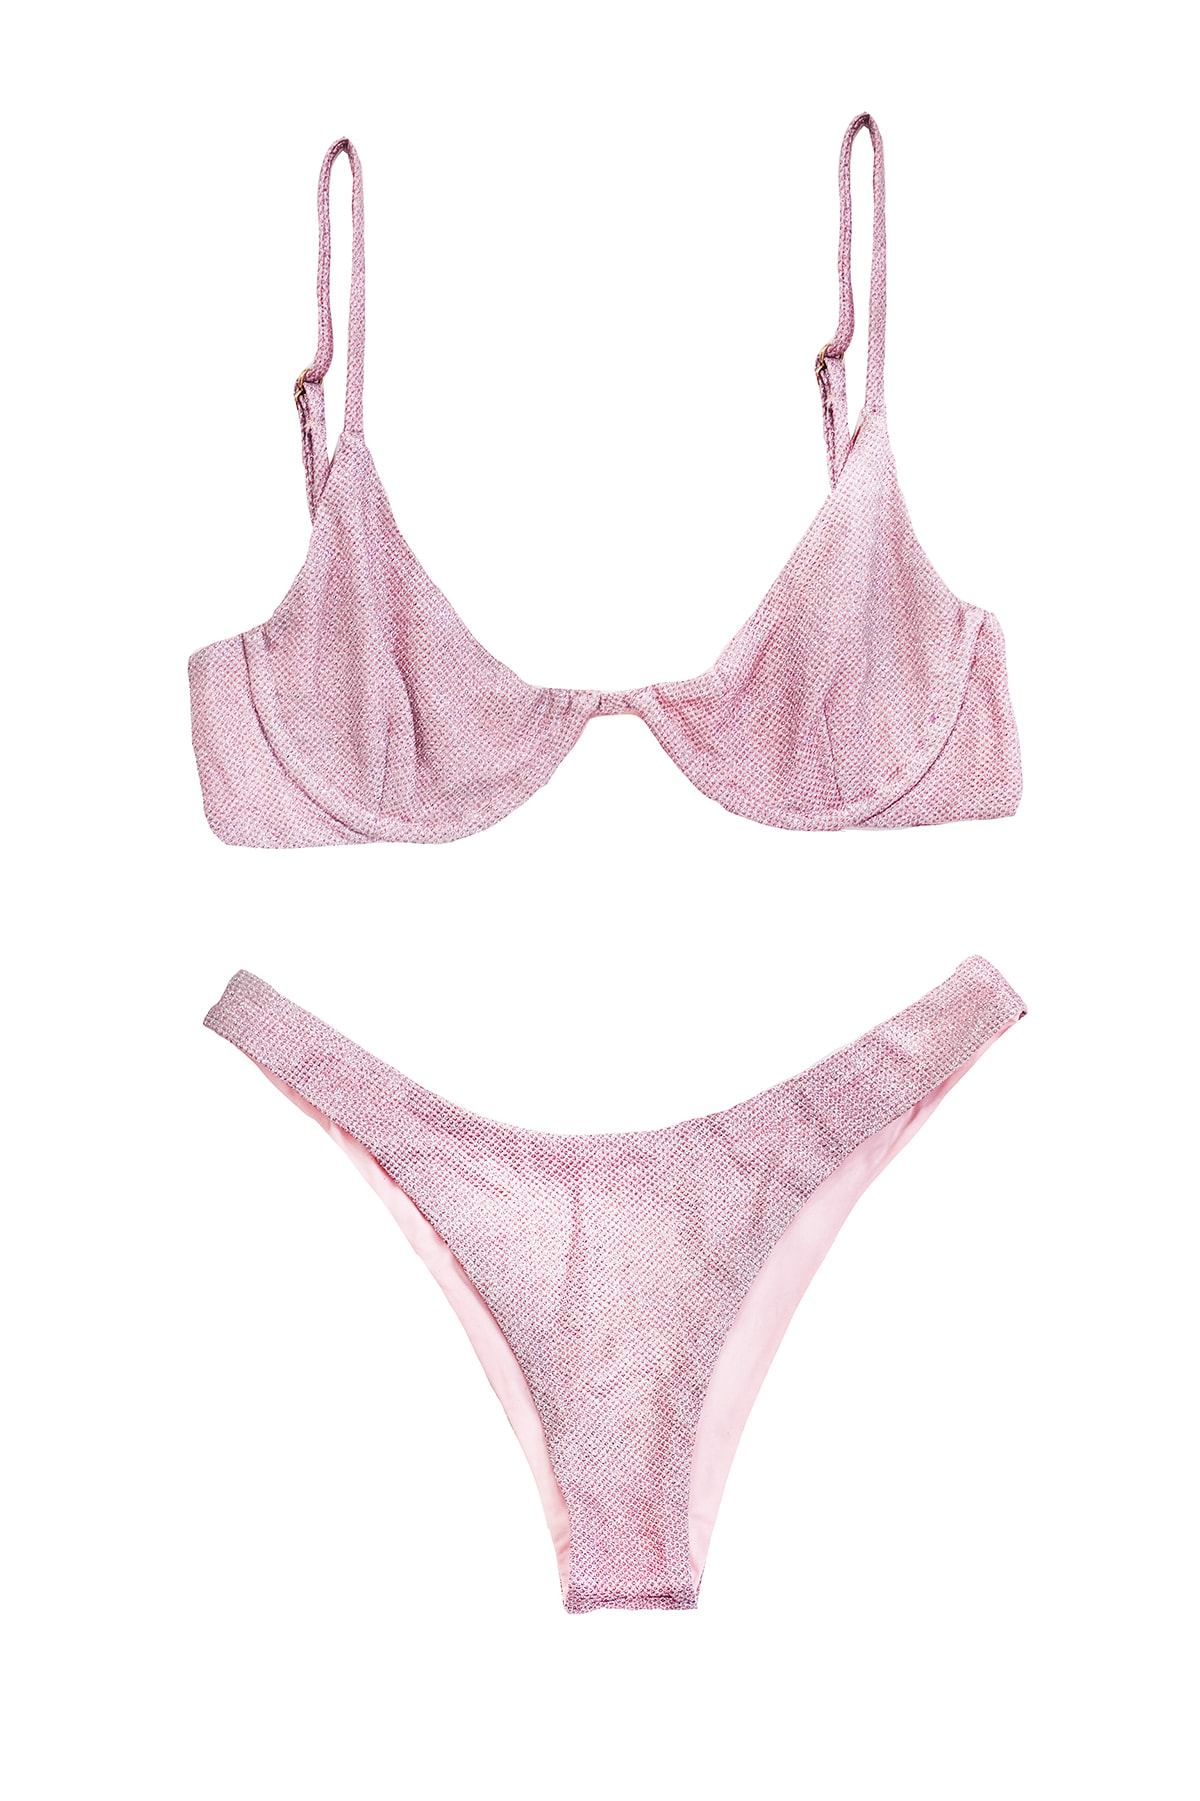 Shop Hailey Baldwin's Danielle Guizio Bikini Set | Hypebae